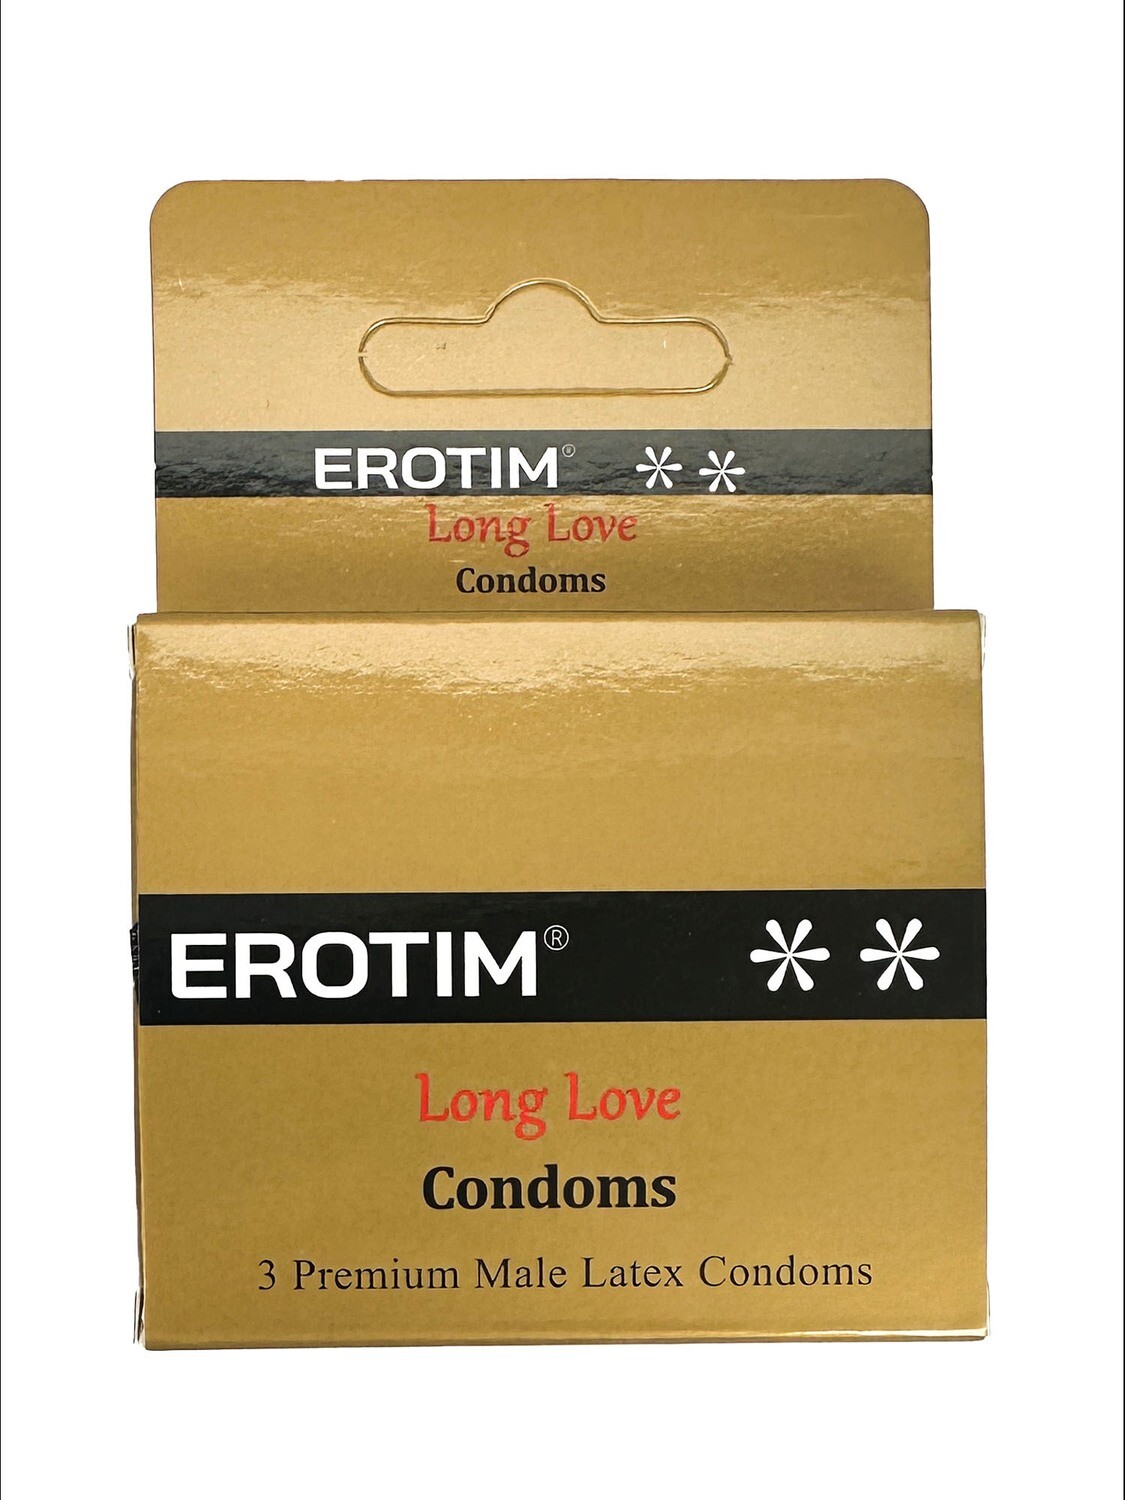 Long Love® Erotim® Condom Gold Packing - 1 Pack of 3 Condoms